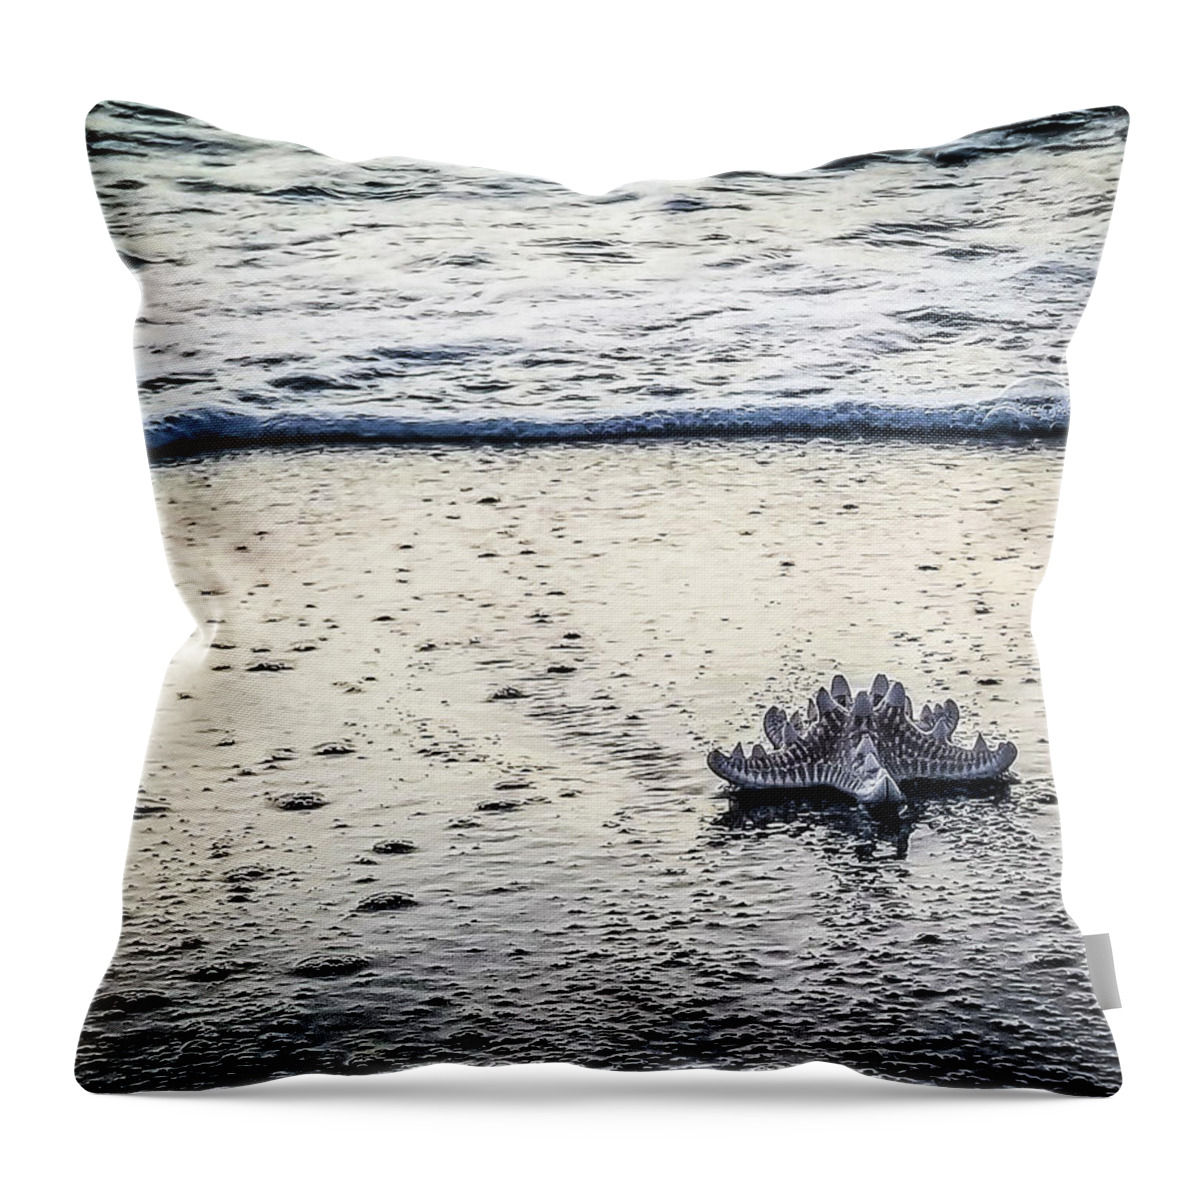  Sunset Throw Pillow featuring the photograph Starfish on Beach by Joe Myeress